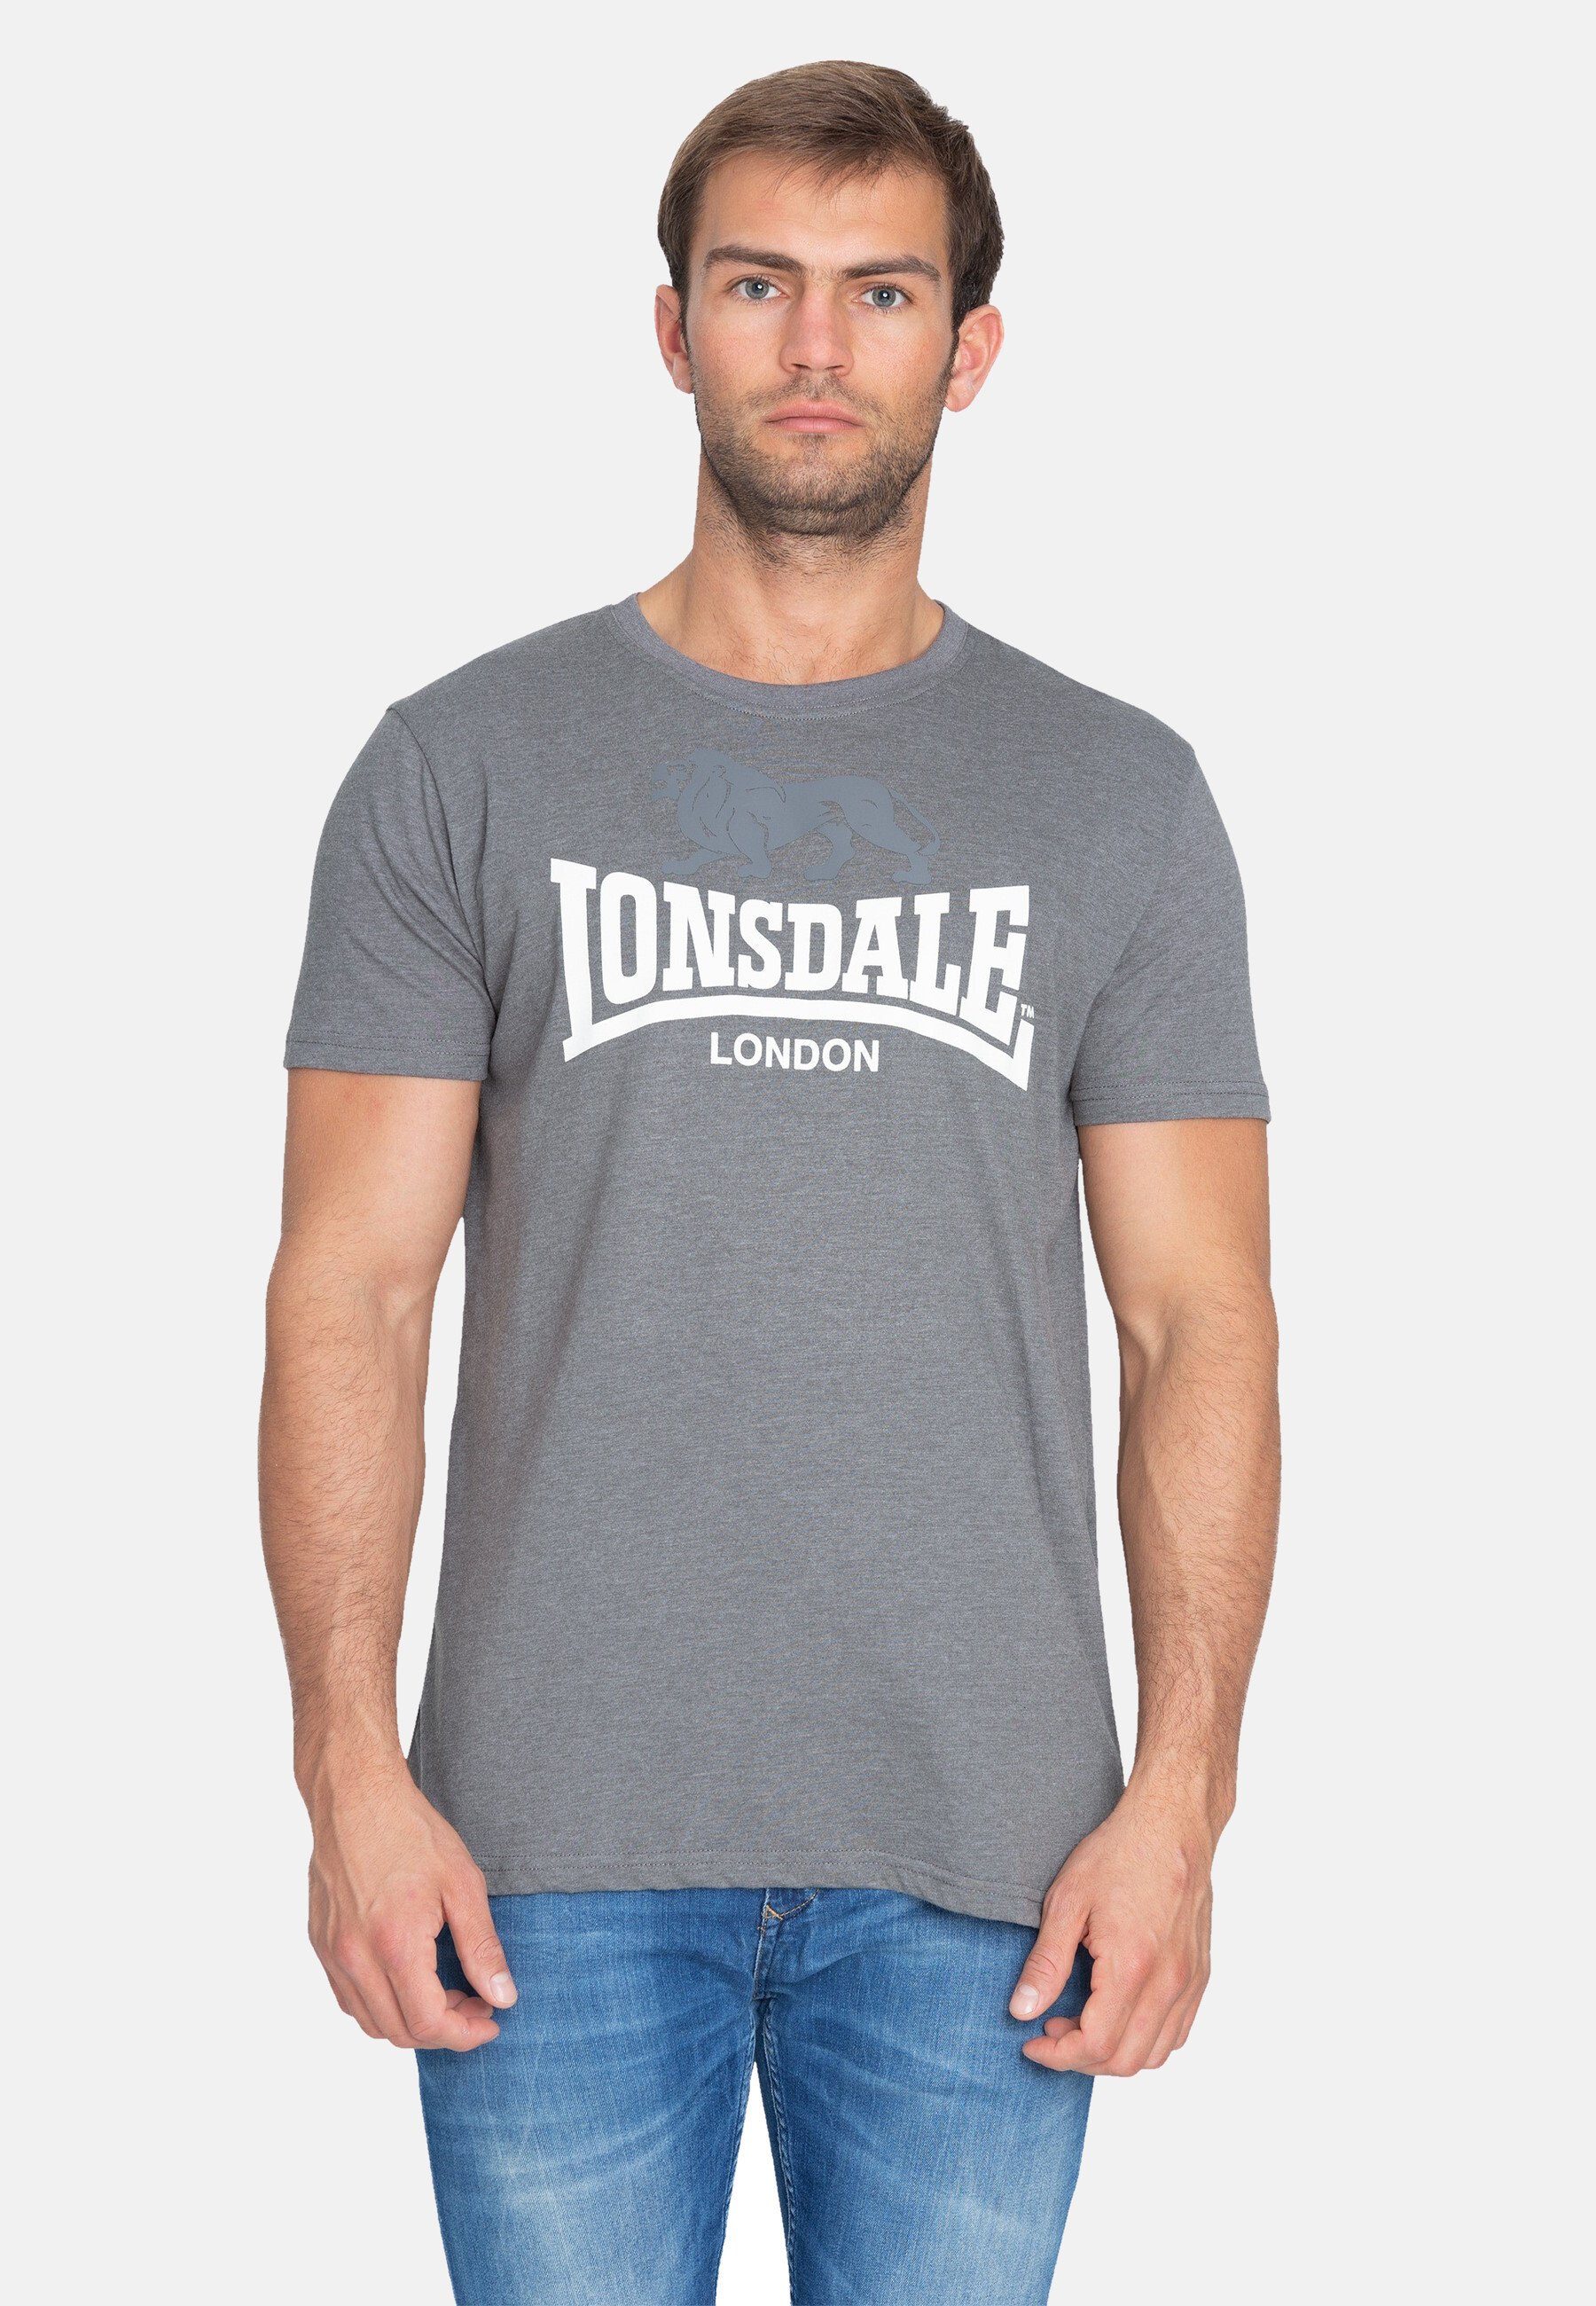 mit GARGRAVE grau Kurzarm-T-Shirt Lonsdale T-Shirt Shirt